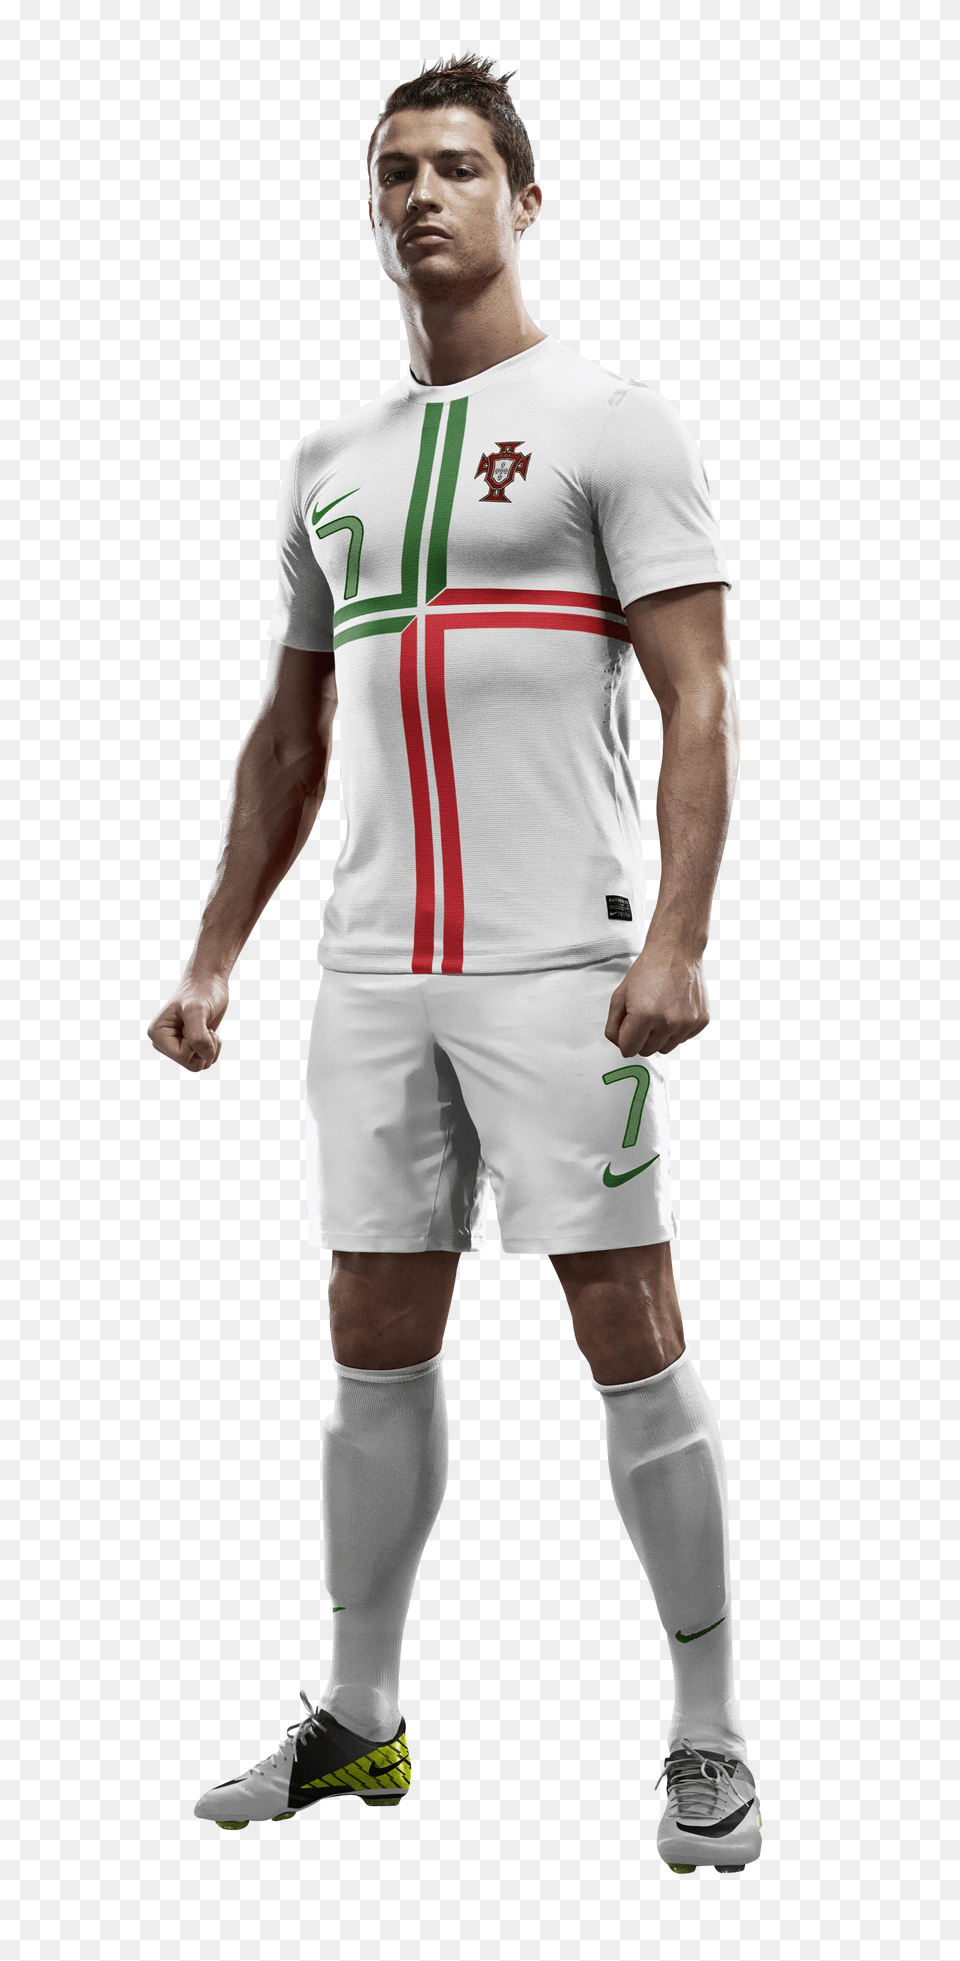 Pngpix Com Cristiano Ronaldo Transparent, Shorts, Clothing, Shirt, Shoe Png Image